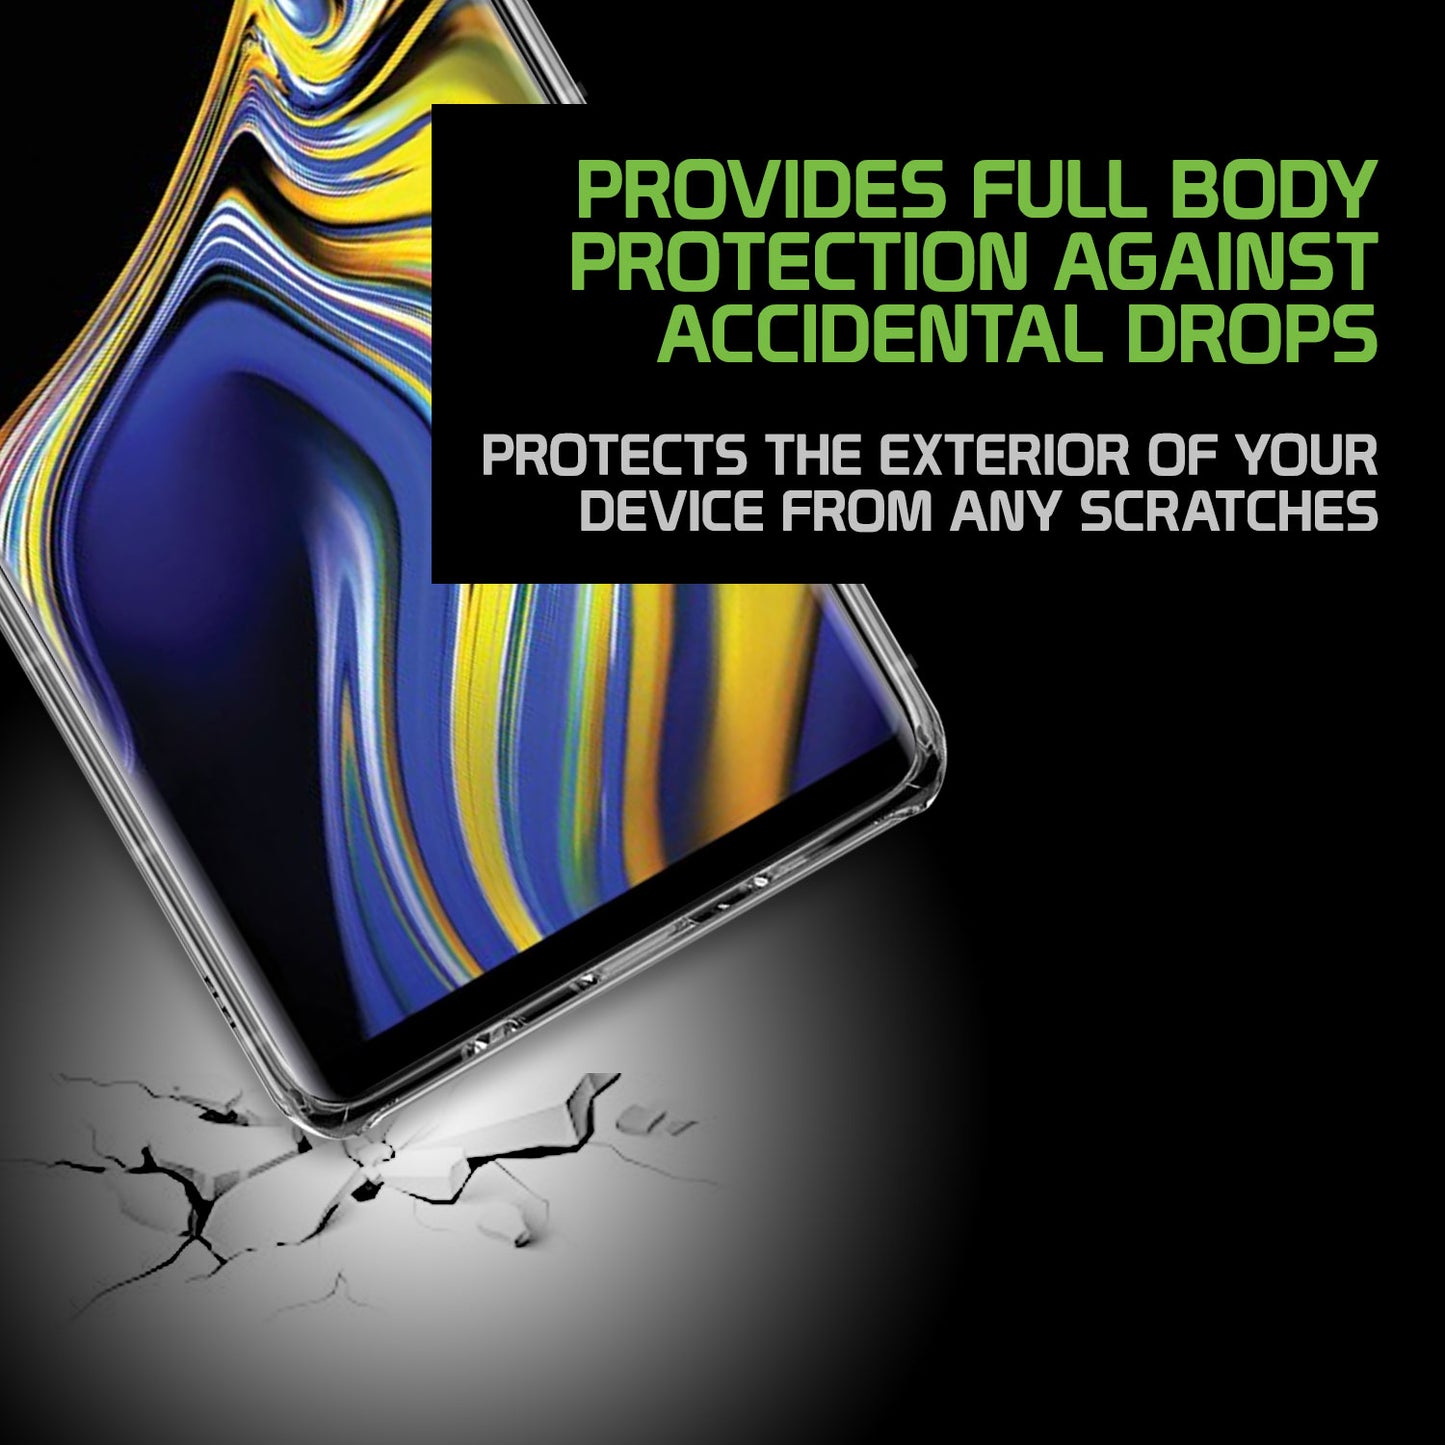 CCSAMN9PGGY - Samsung Galaxy Note 9 Ultra Slim Diamond Pattern Protective Case Cover - Grey